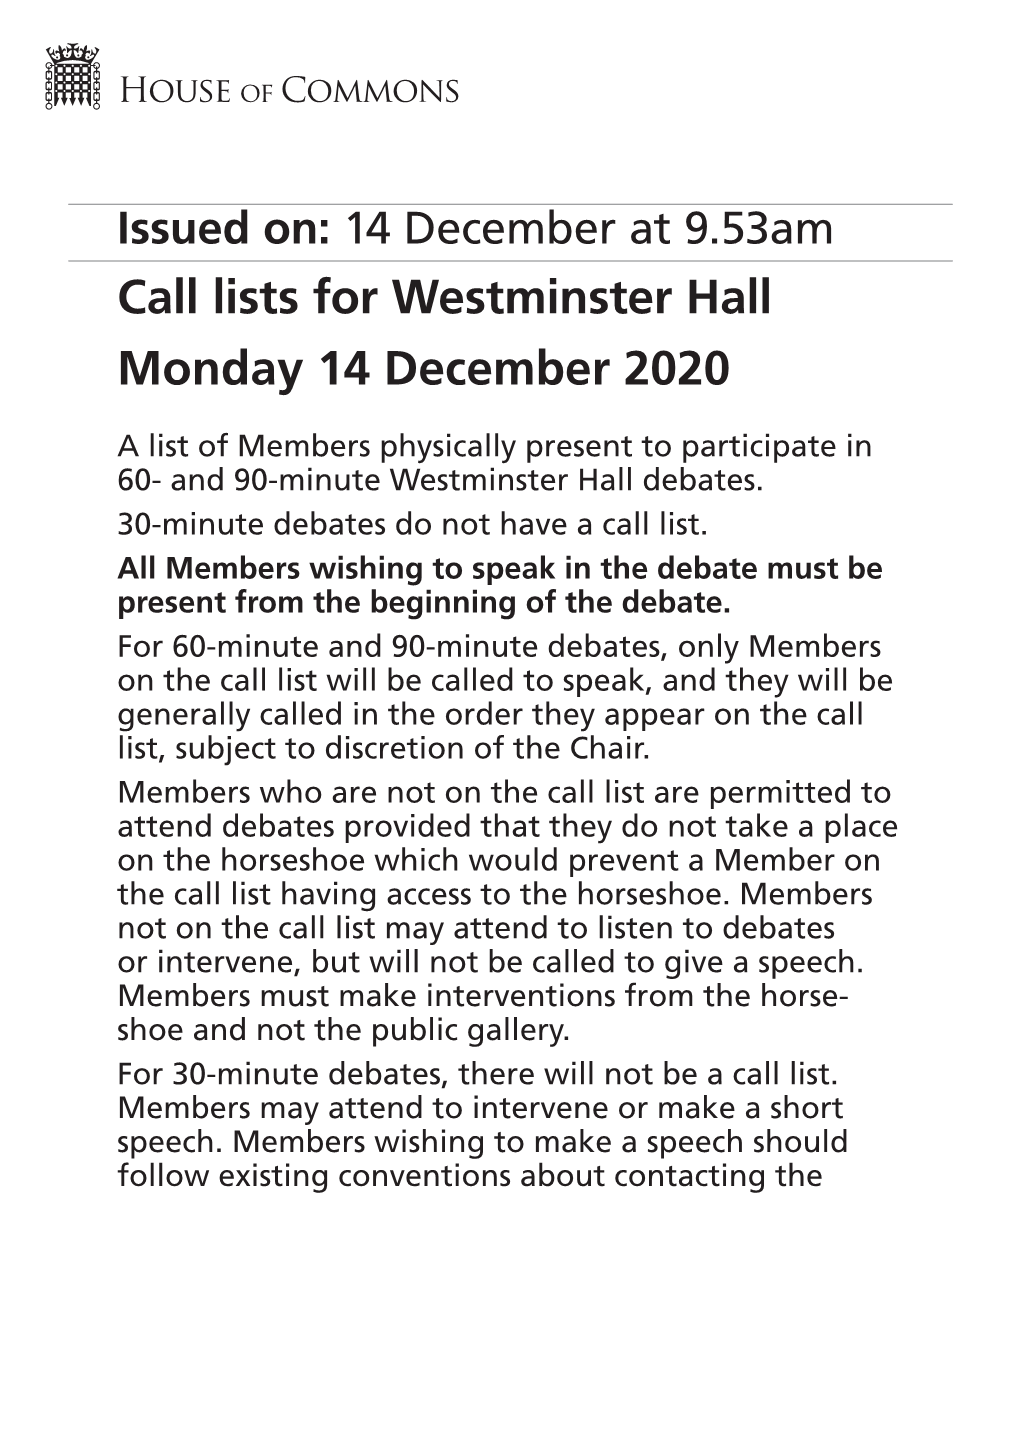 Westminster Hall Monday 14 December 2020